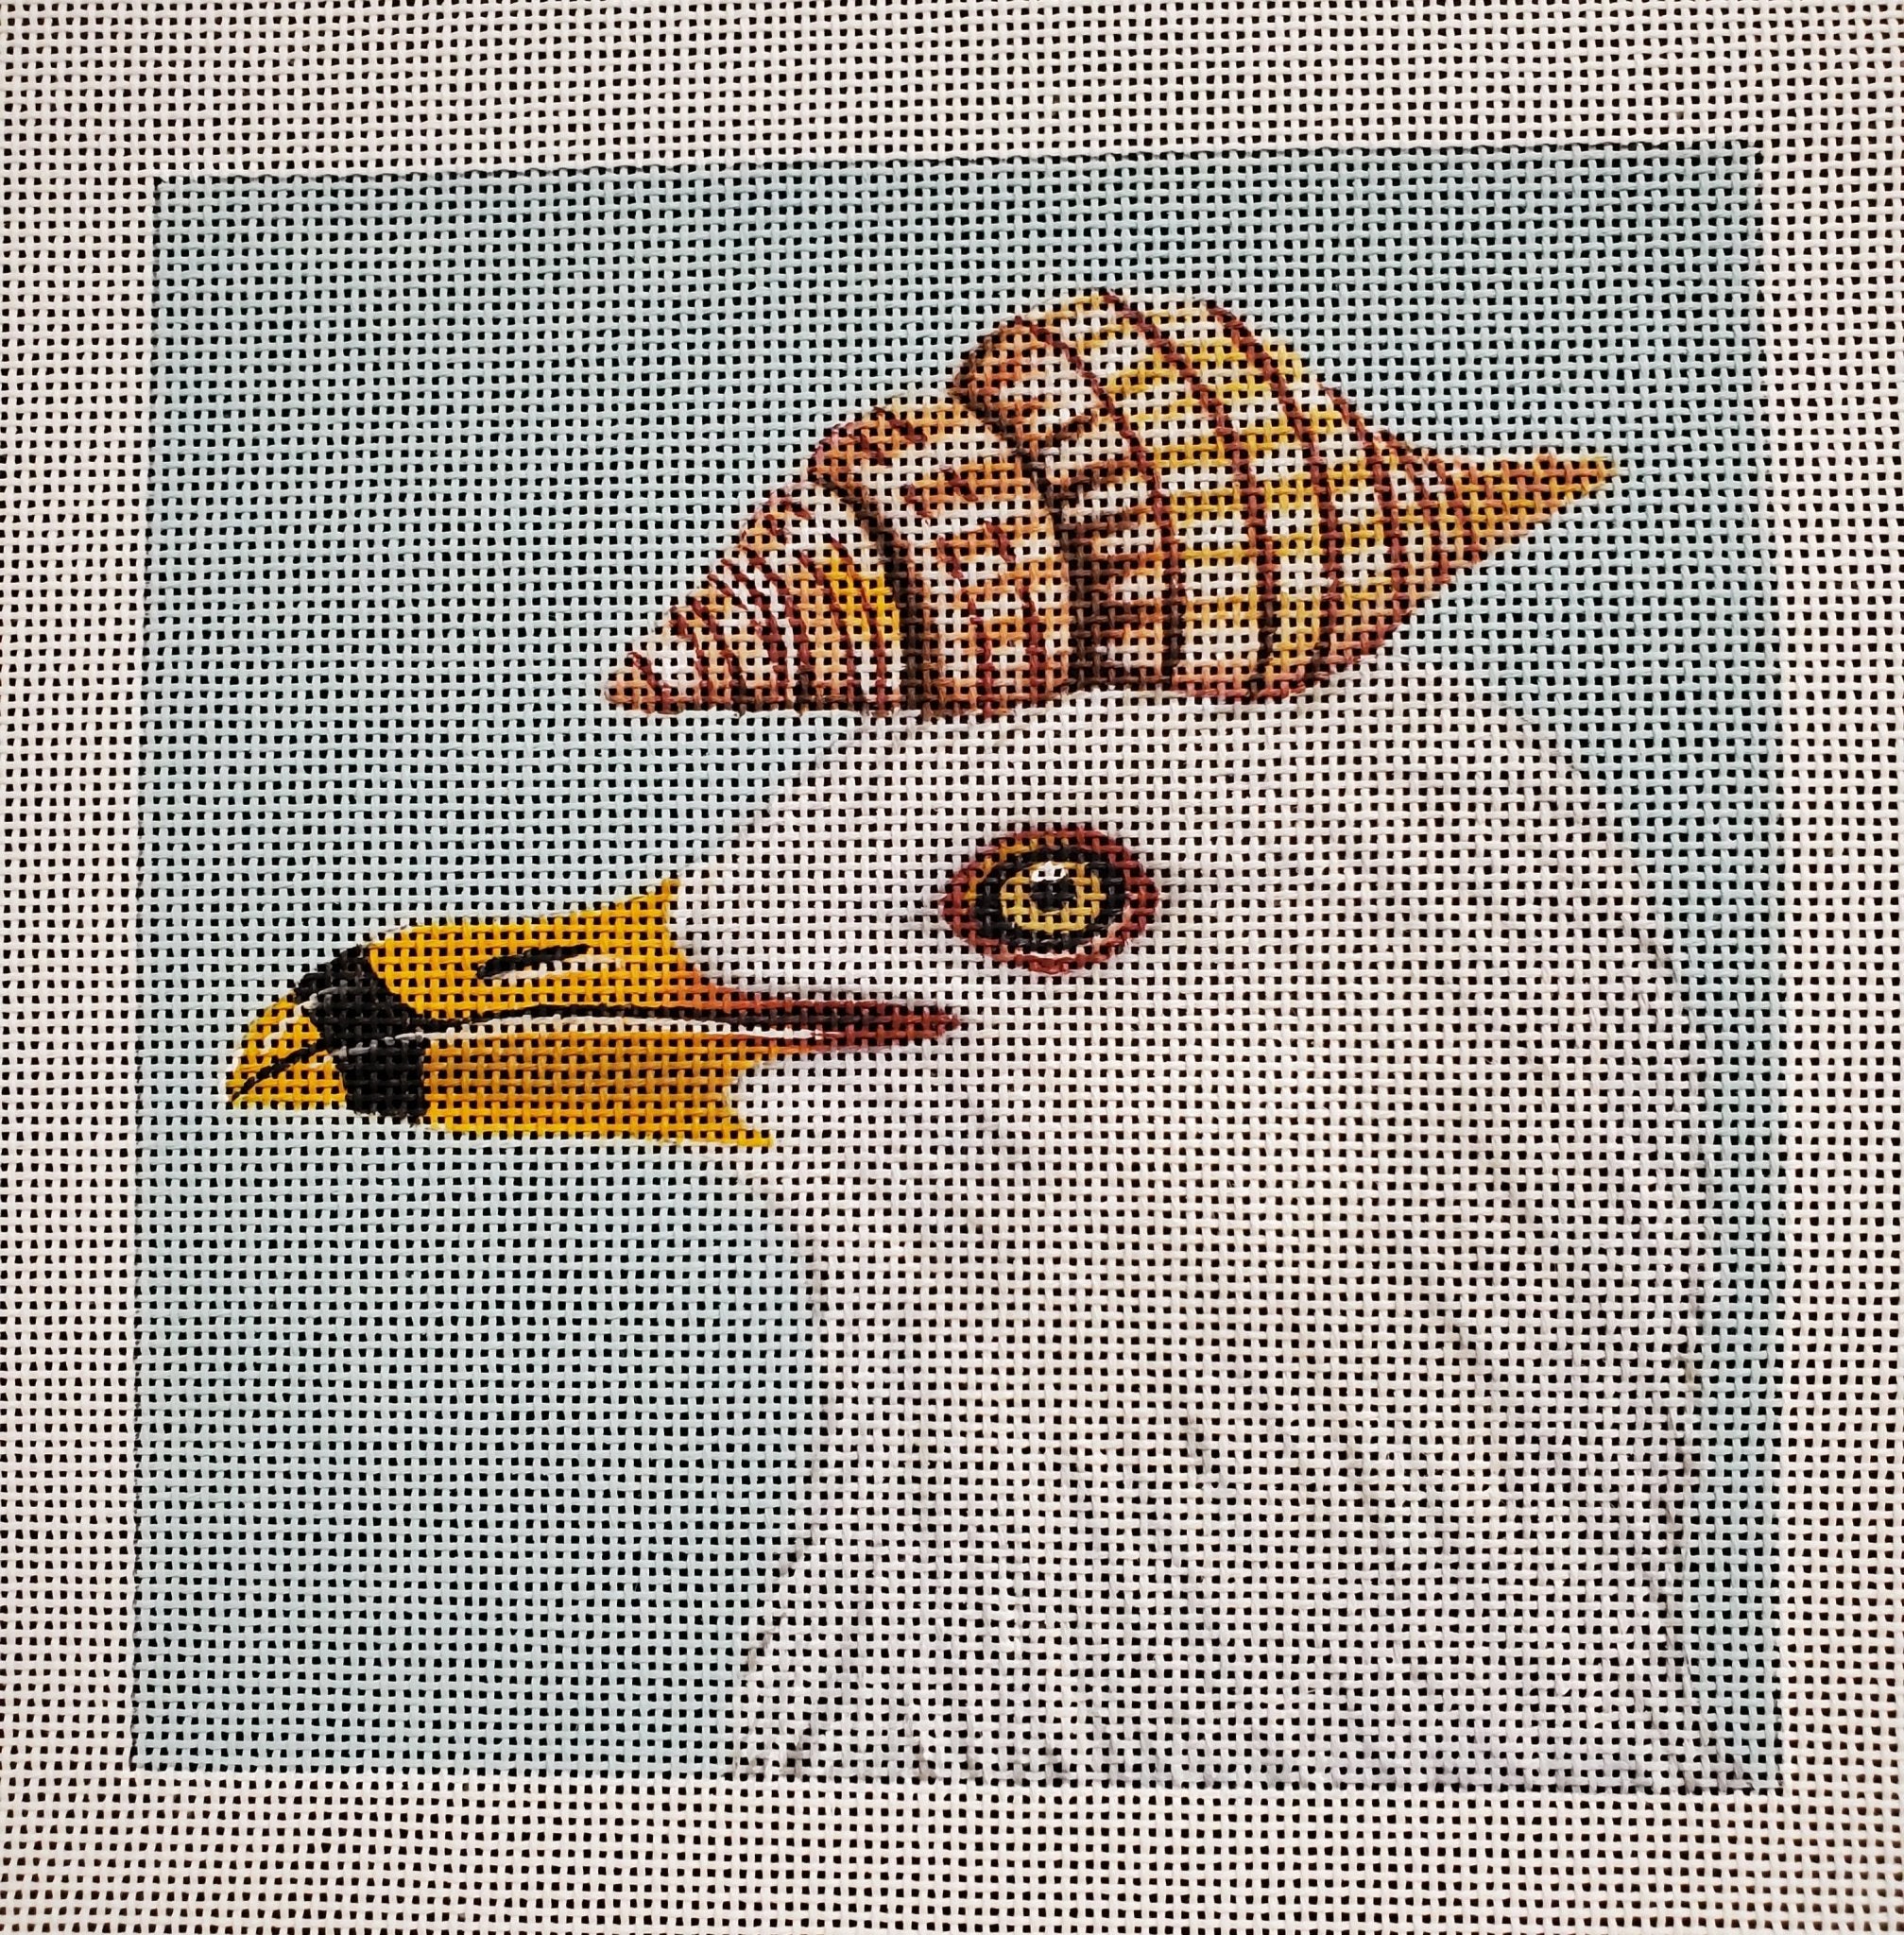 Sea Gull - The Flying Needles